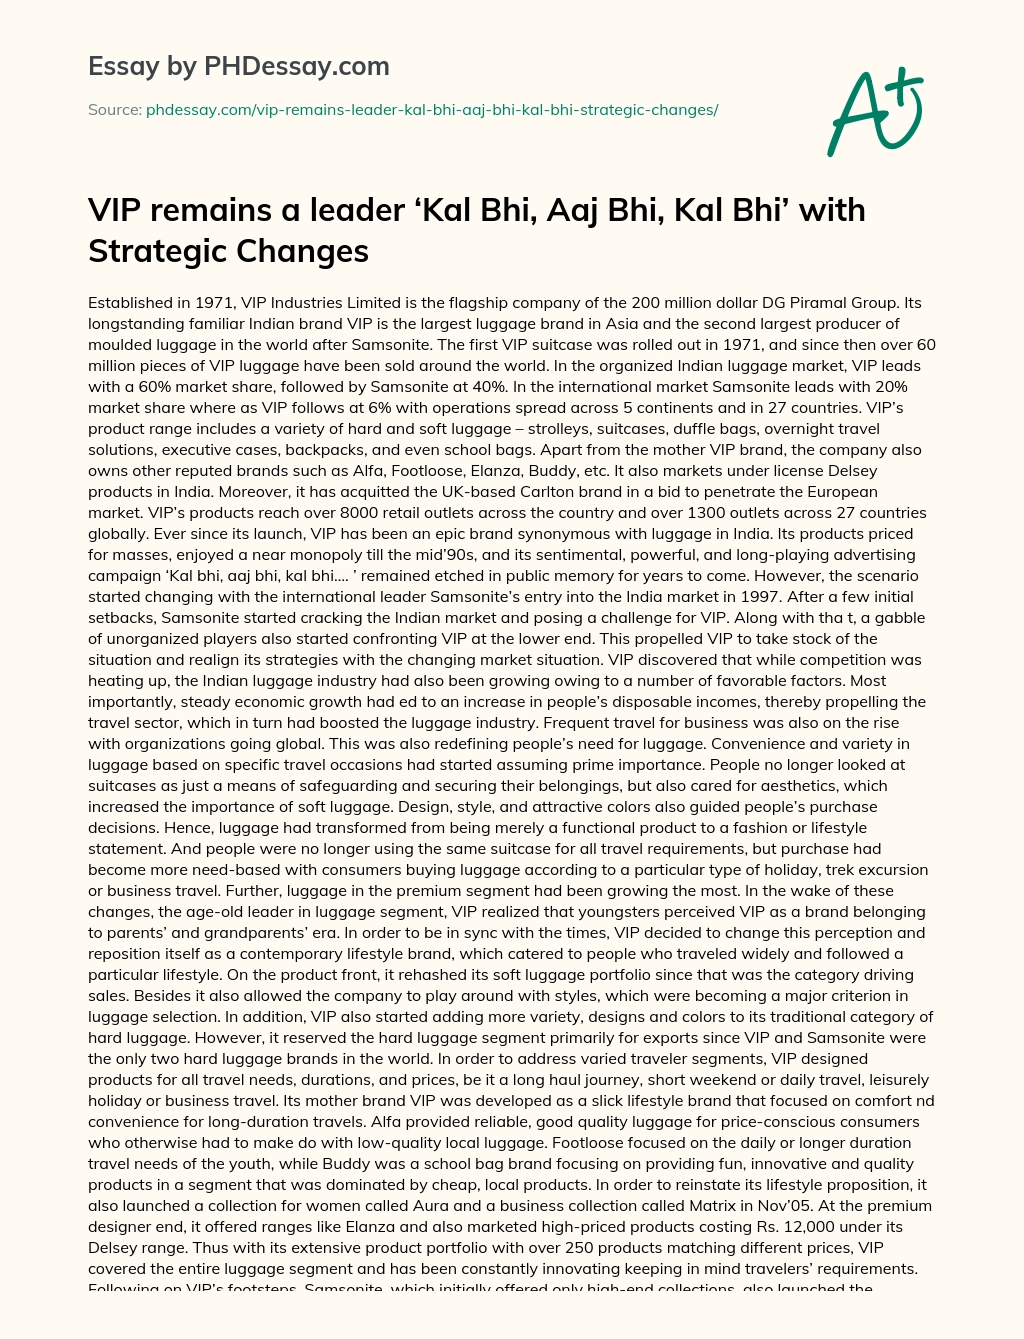 VIP remains a leader ‘Kal Bhi, Aaj Bhi, Kal Bhi’ with Strategic Changes essay